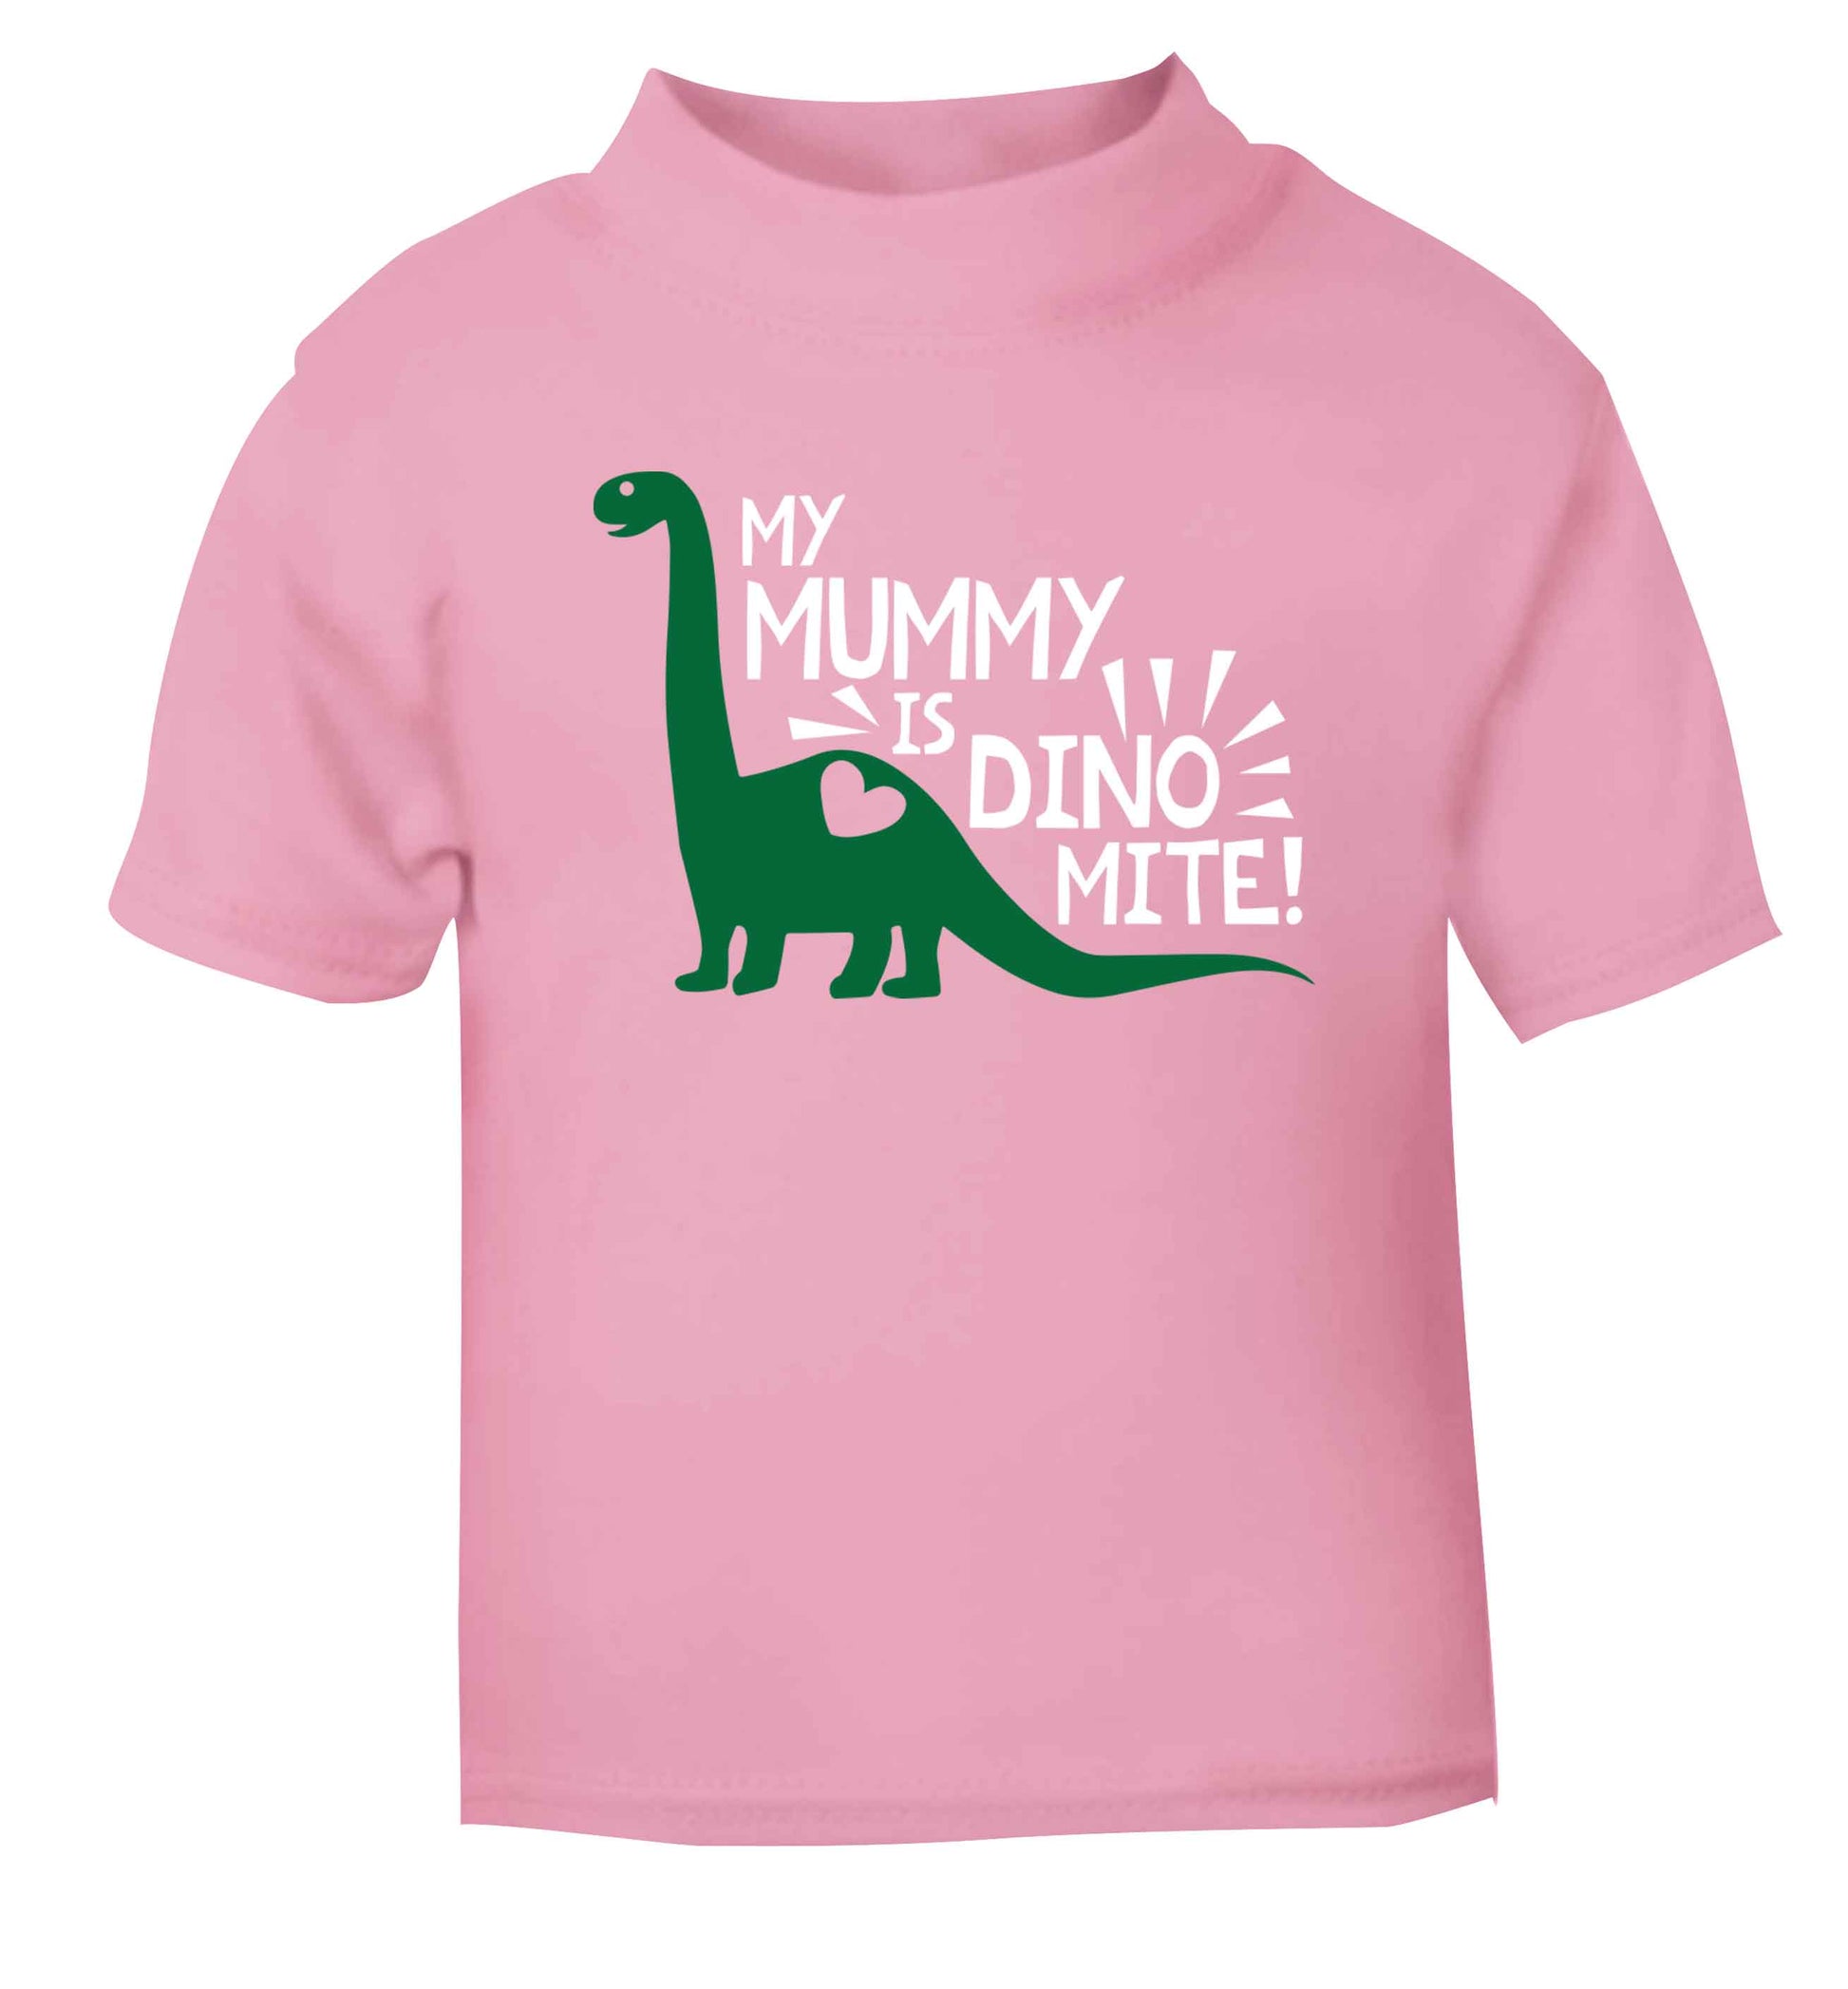 My mummy is dinomite light pink baby toddler Tshirt 2 Years